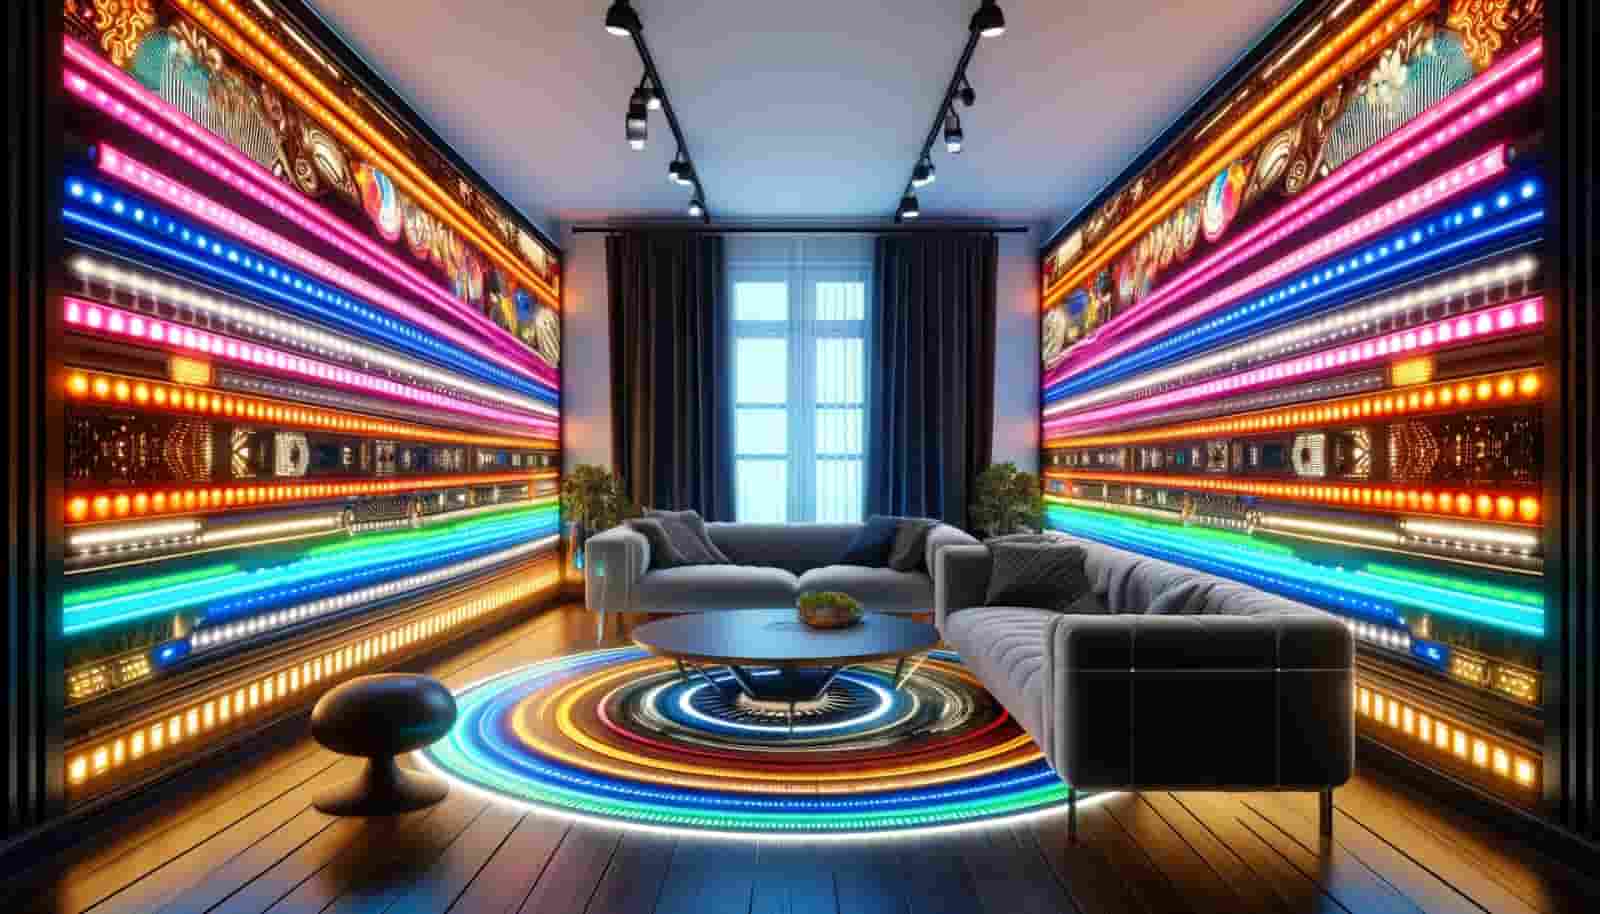 Effects of LED stripe lights